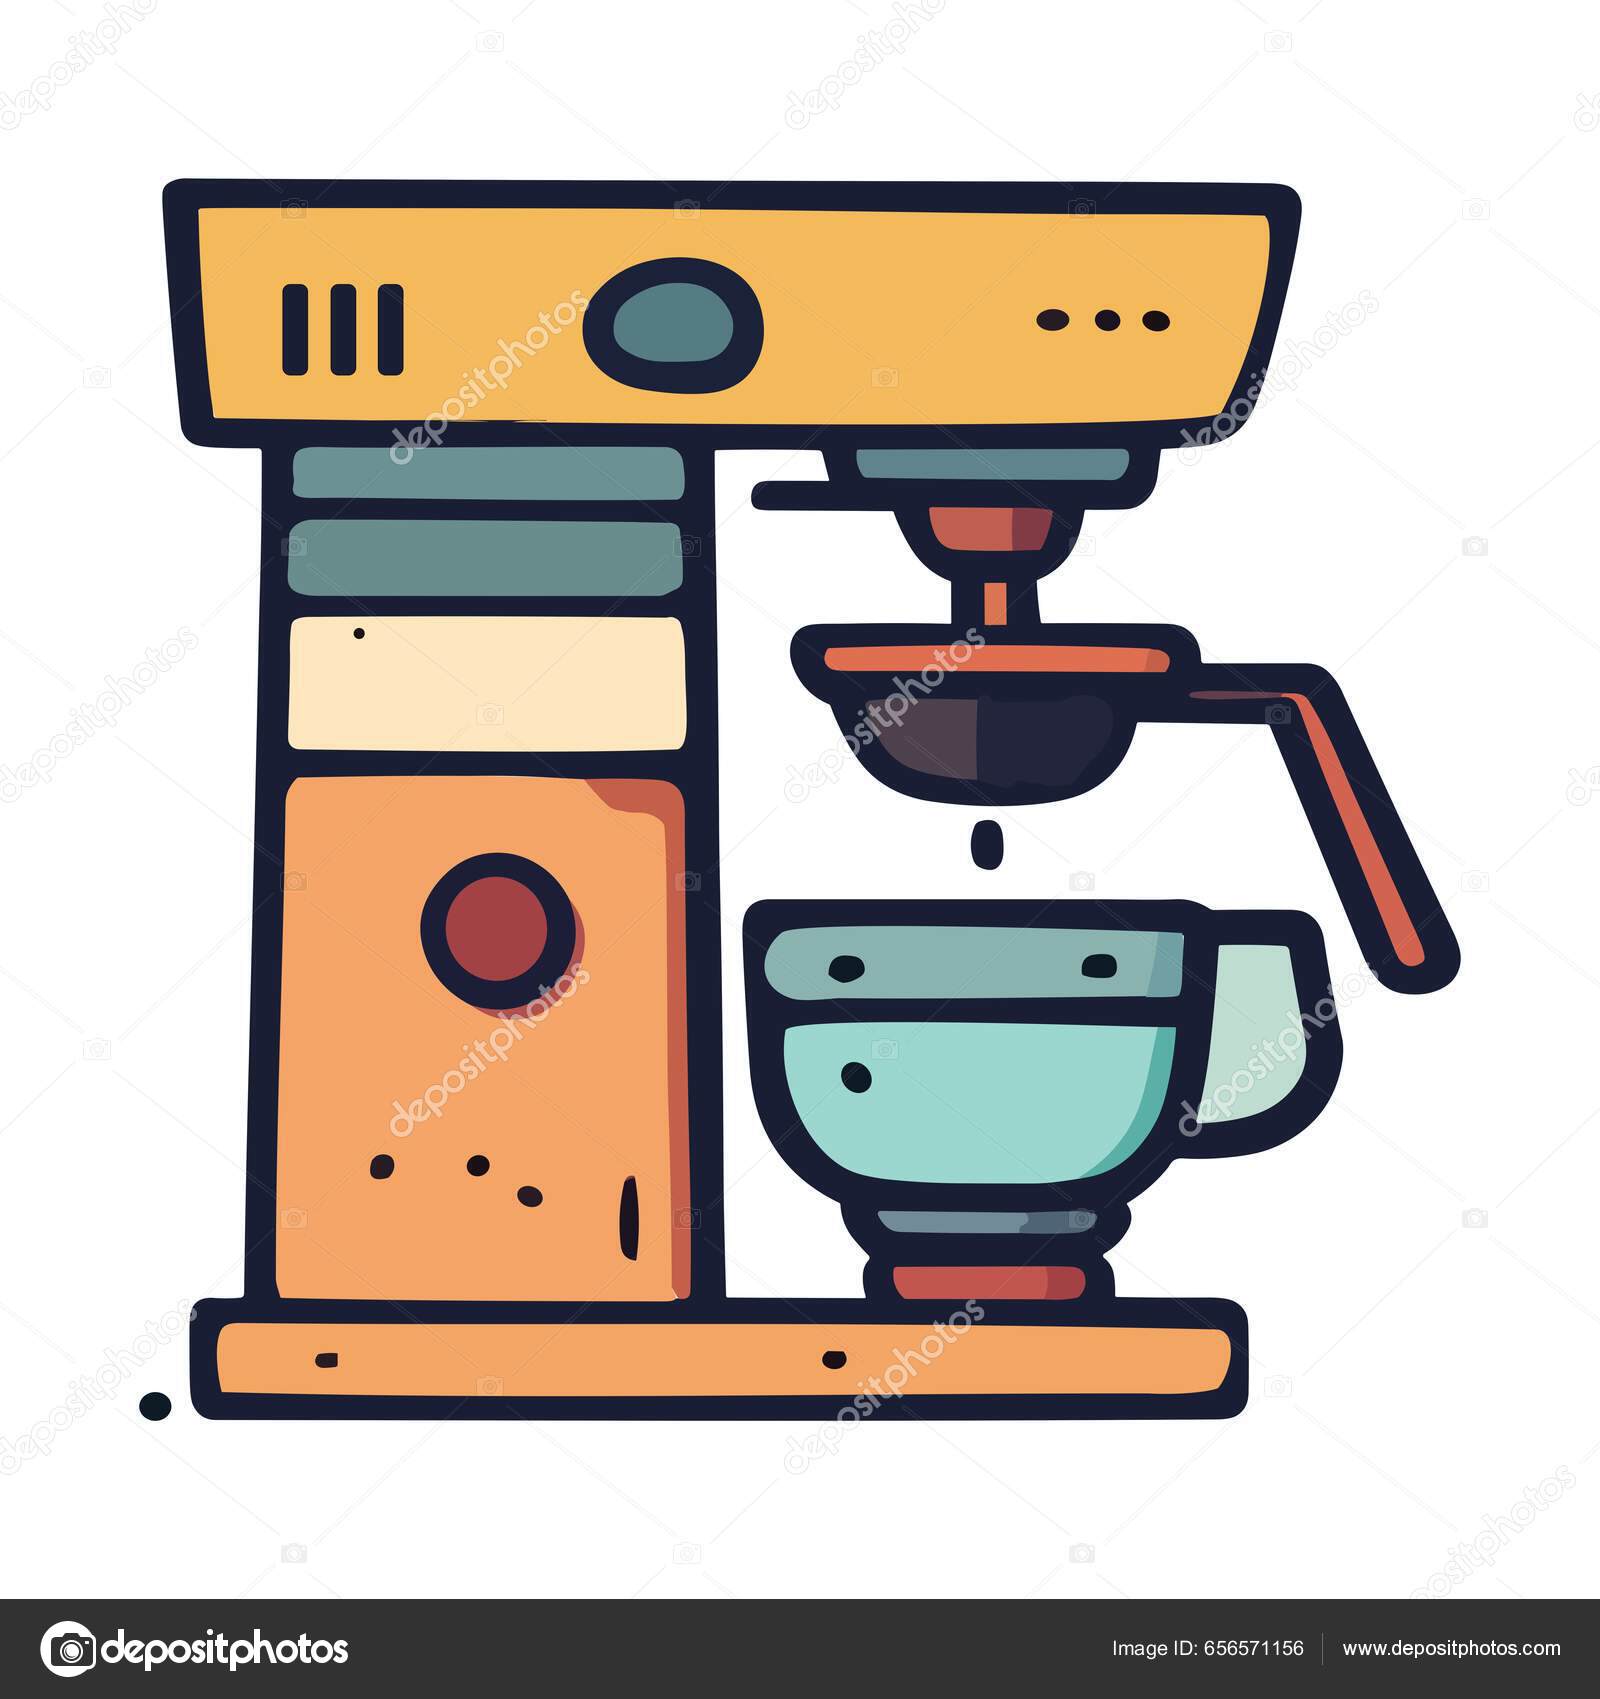 https://st5.depositphotos.com/71233600/65657/v/1600/depositphotos_656571156-stock-illustration-retro-coffee-maker-vintage-coffee.jpg